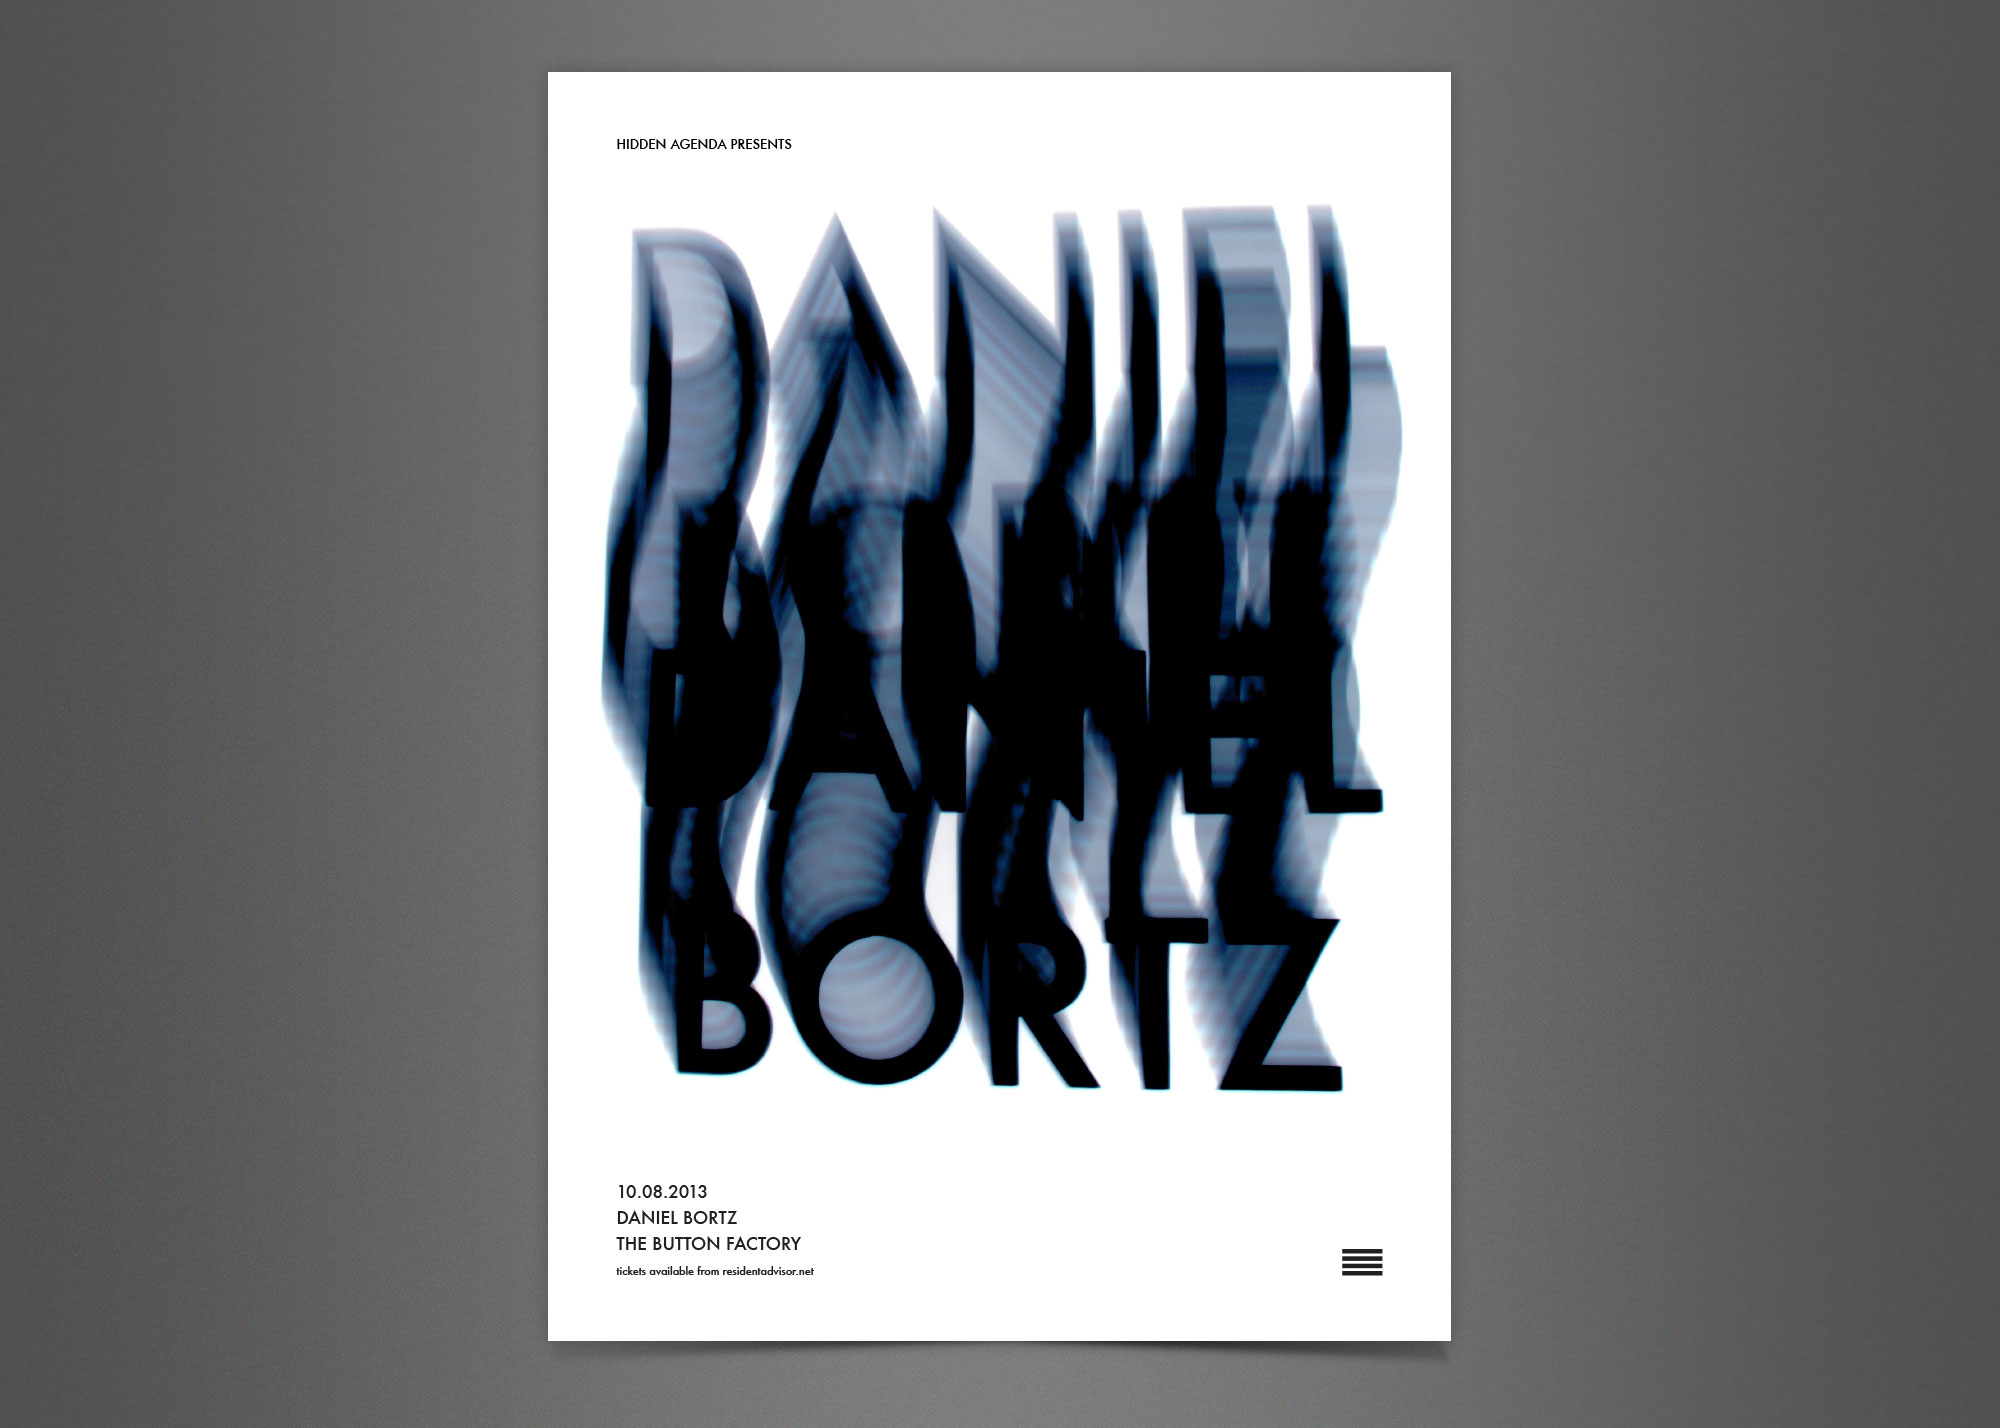 Cover image: Daniel Bortz Poster (2013)